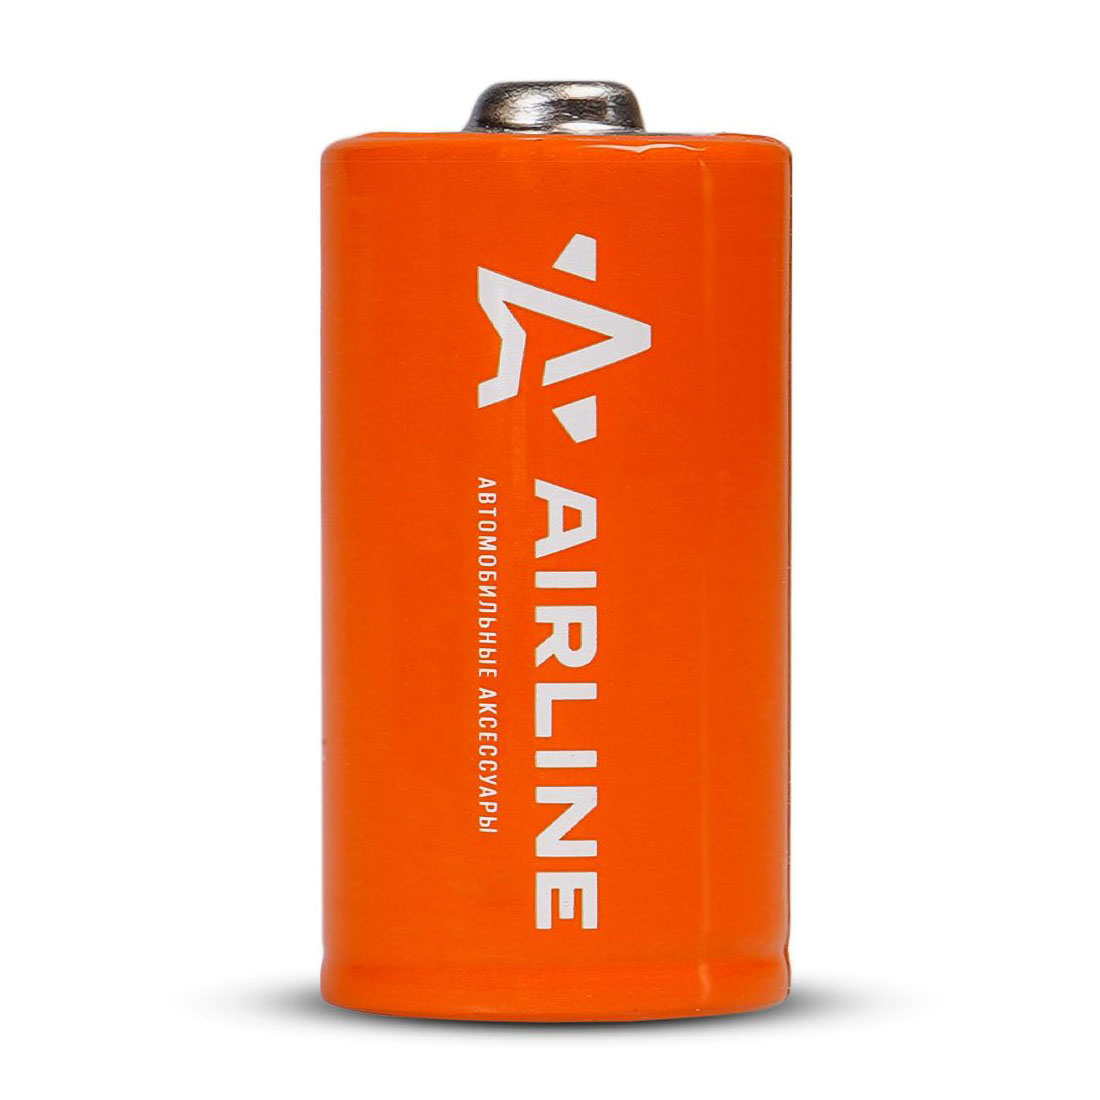 AIRLINE CR123A01 Батарейка CR123A 3V литиевая 1 шт. airline cr163201 батарейка cr1632 3v для брелоков сигнализаций литиевая 1 шт cr1632 01